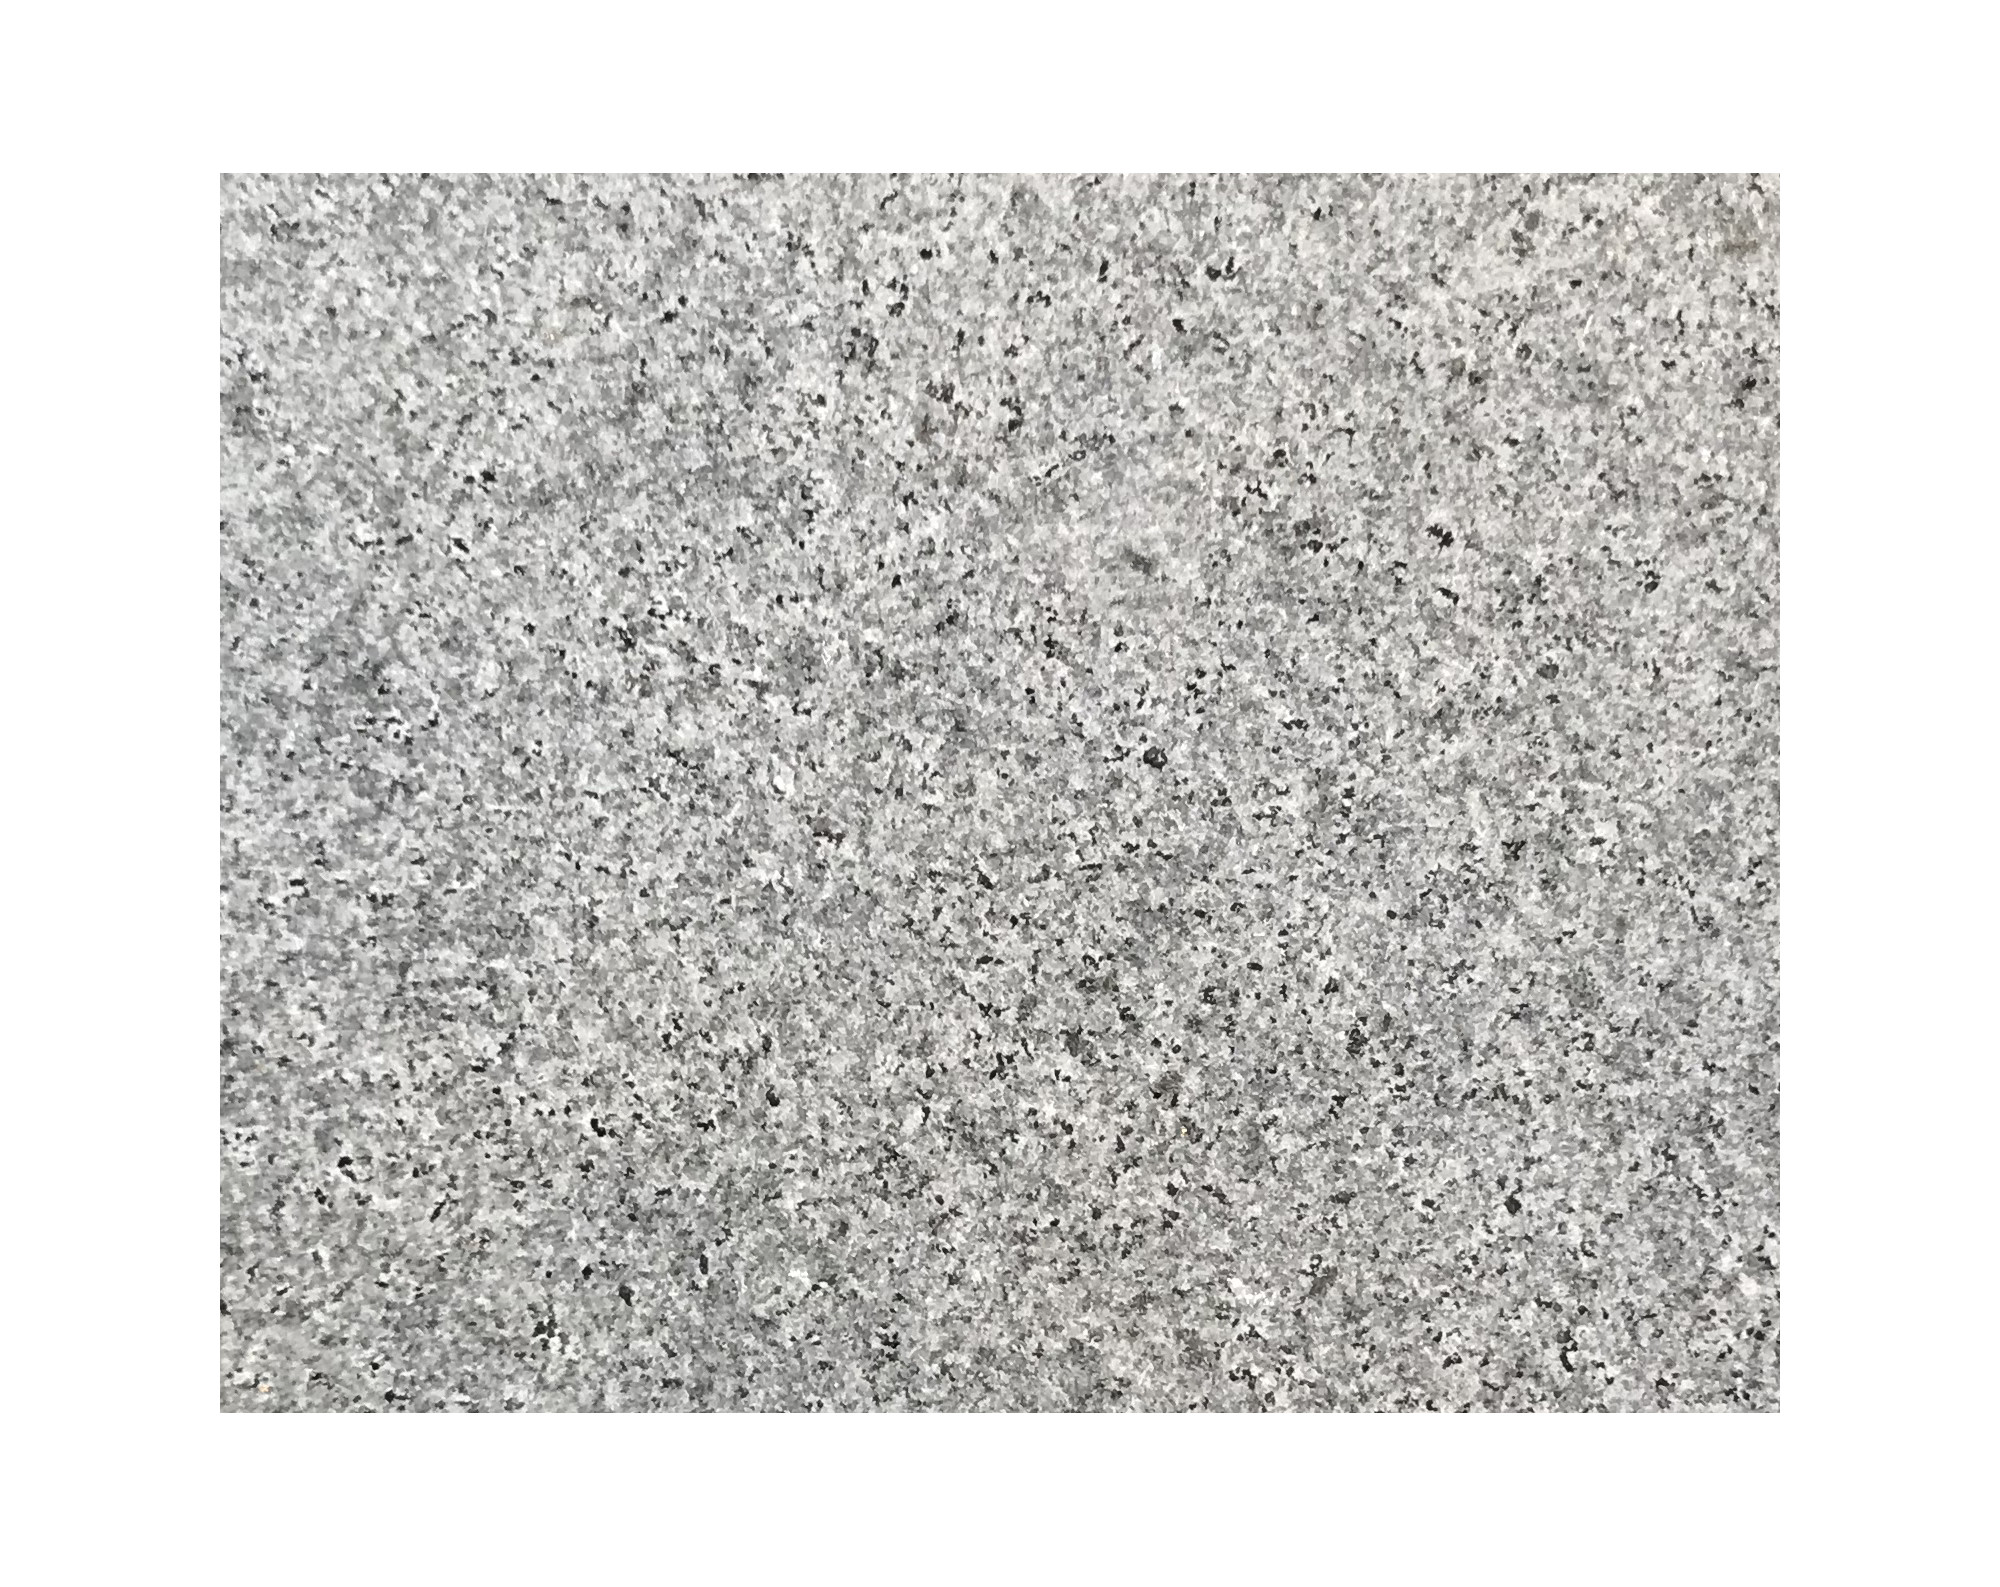 Harmo roc napoliset, natura-serie, ovaal d: 4,20mx8,20m, berggrijs, graniet